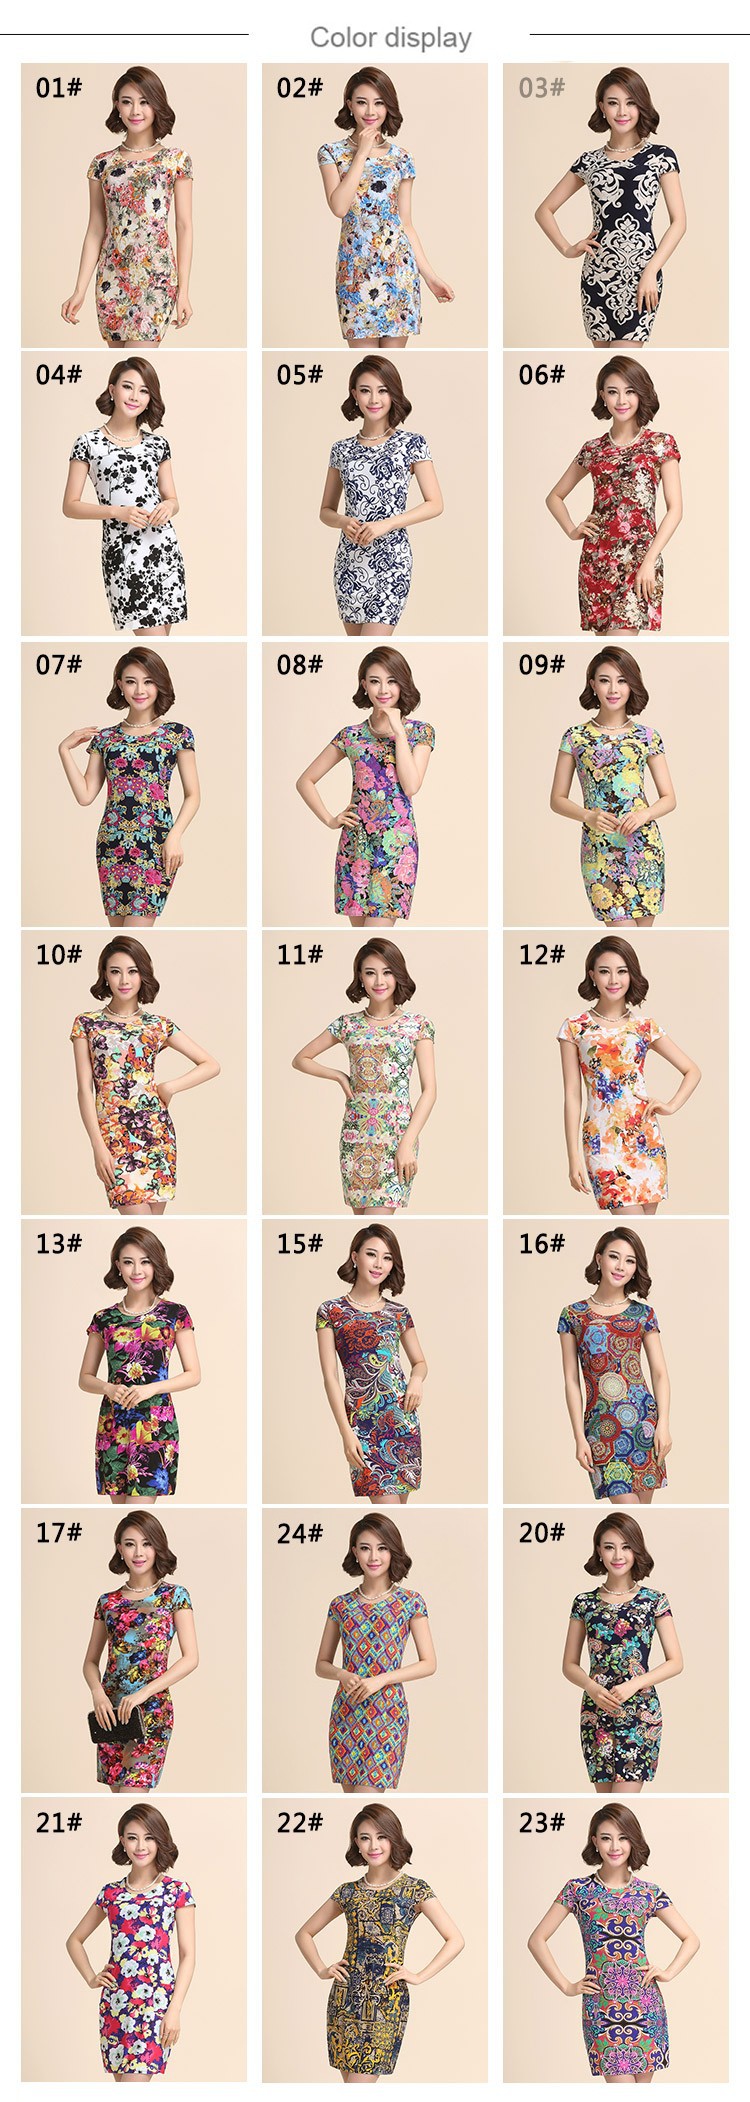 1 L-4XL 2014 New Fashion Women Summer dress Slim Tunic Milk Silk print Floral dresses Casual Plus Size sexy bodycon dress XW101